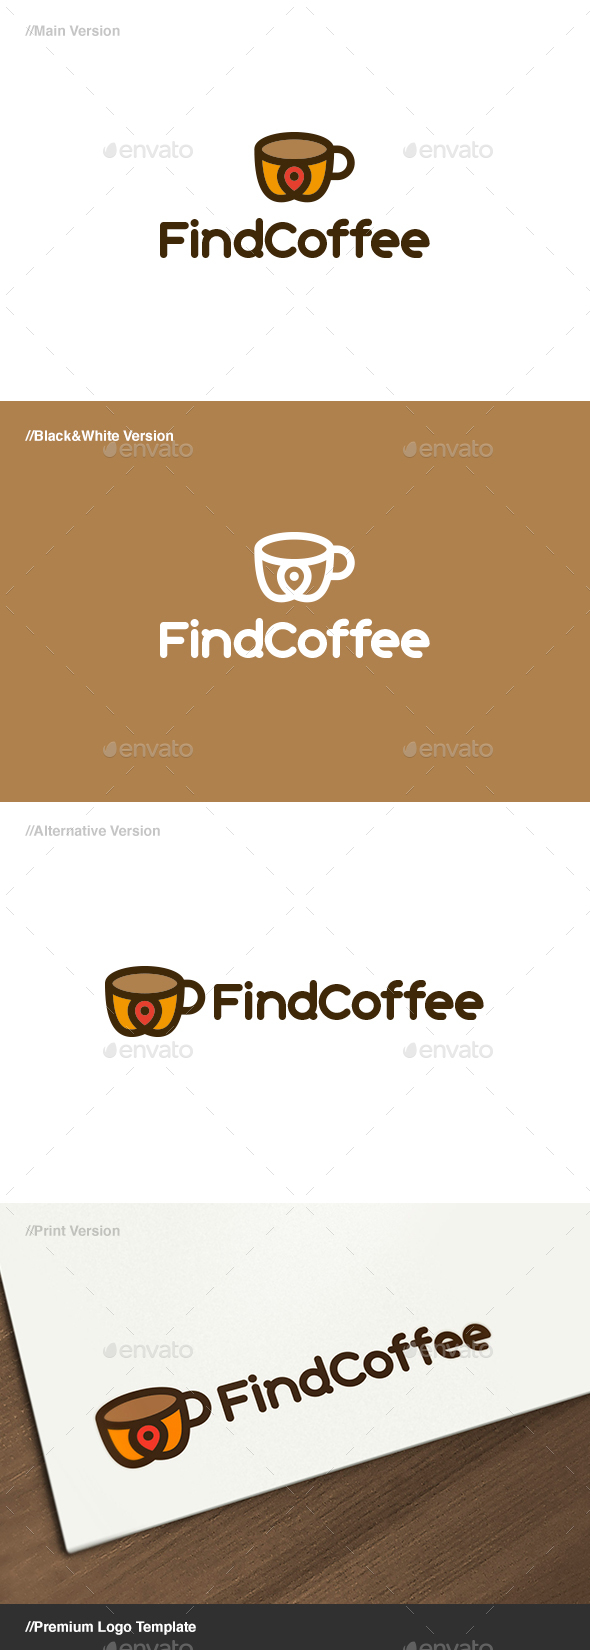 Find Coffee Logo